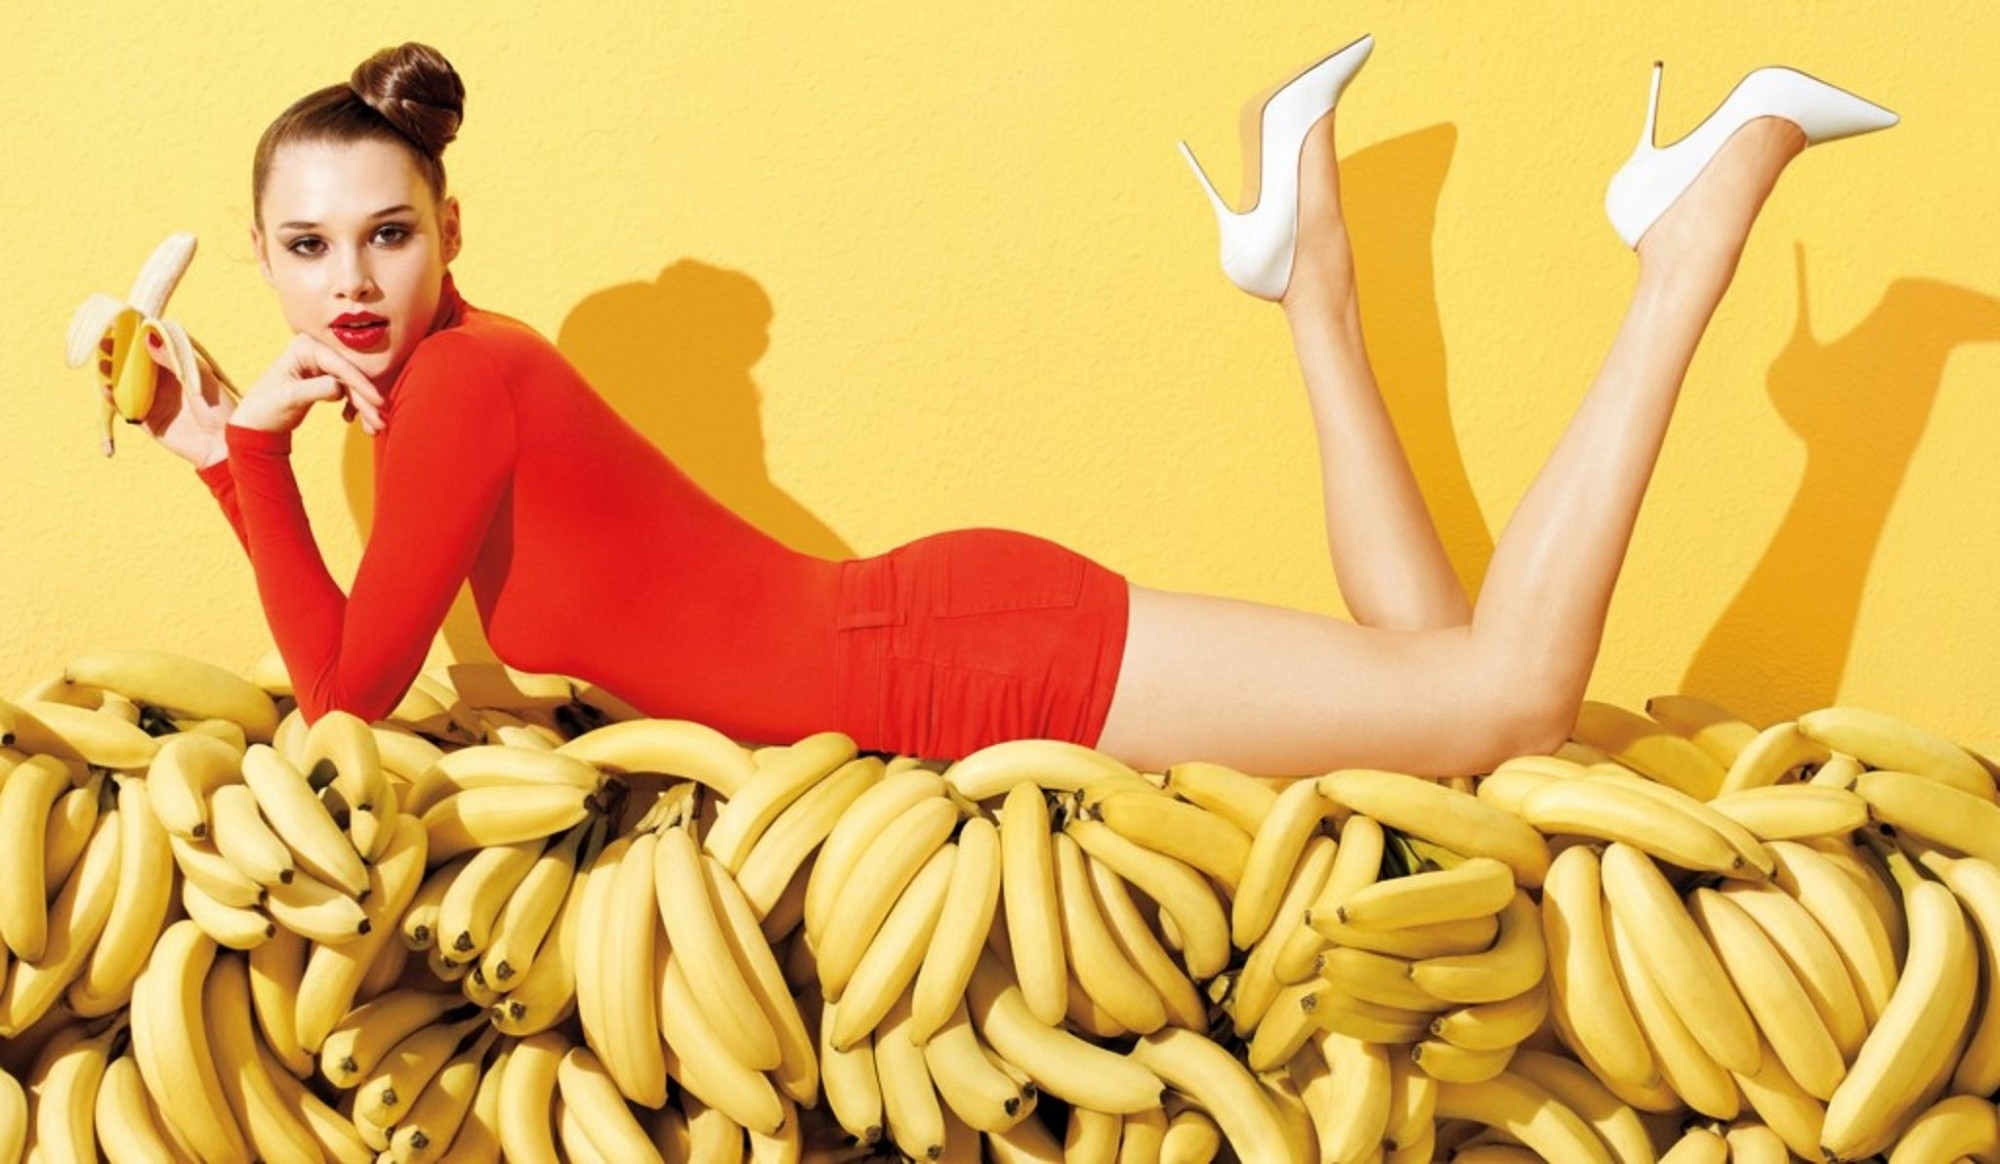 Реклама вибратора. Девушка с бананом. Фотосессия с бананом. Красивая девушка с бананом. Девушка ест банан.